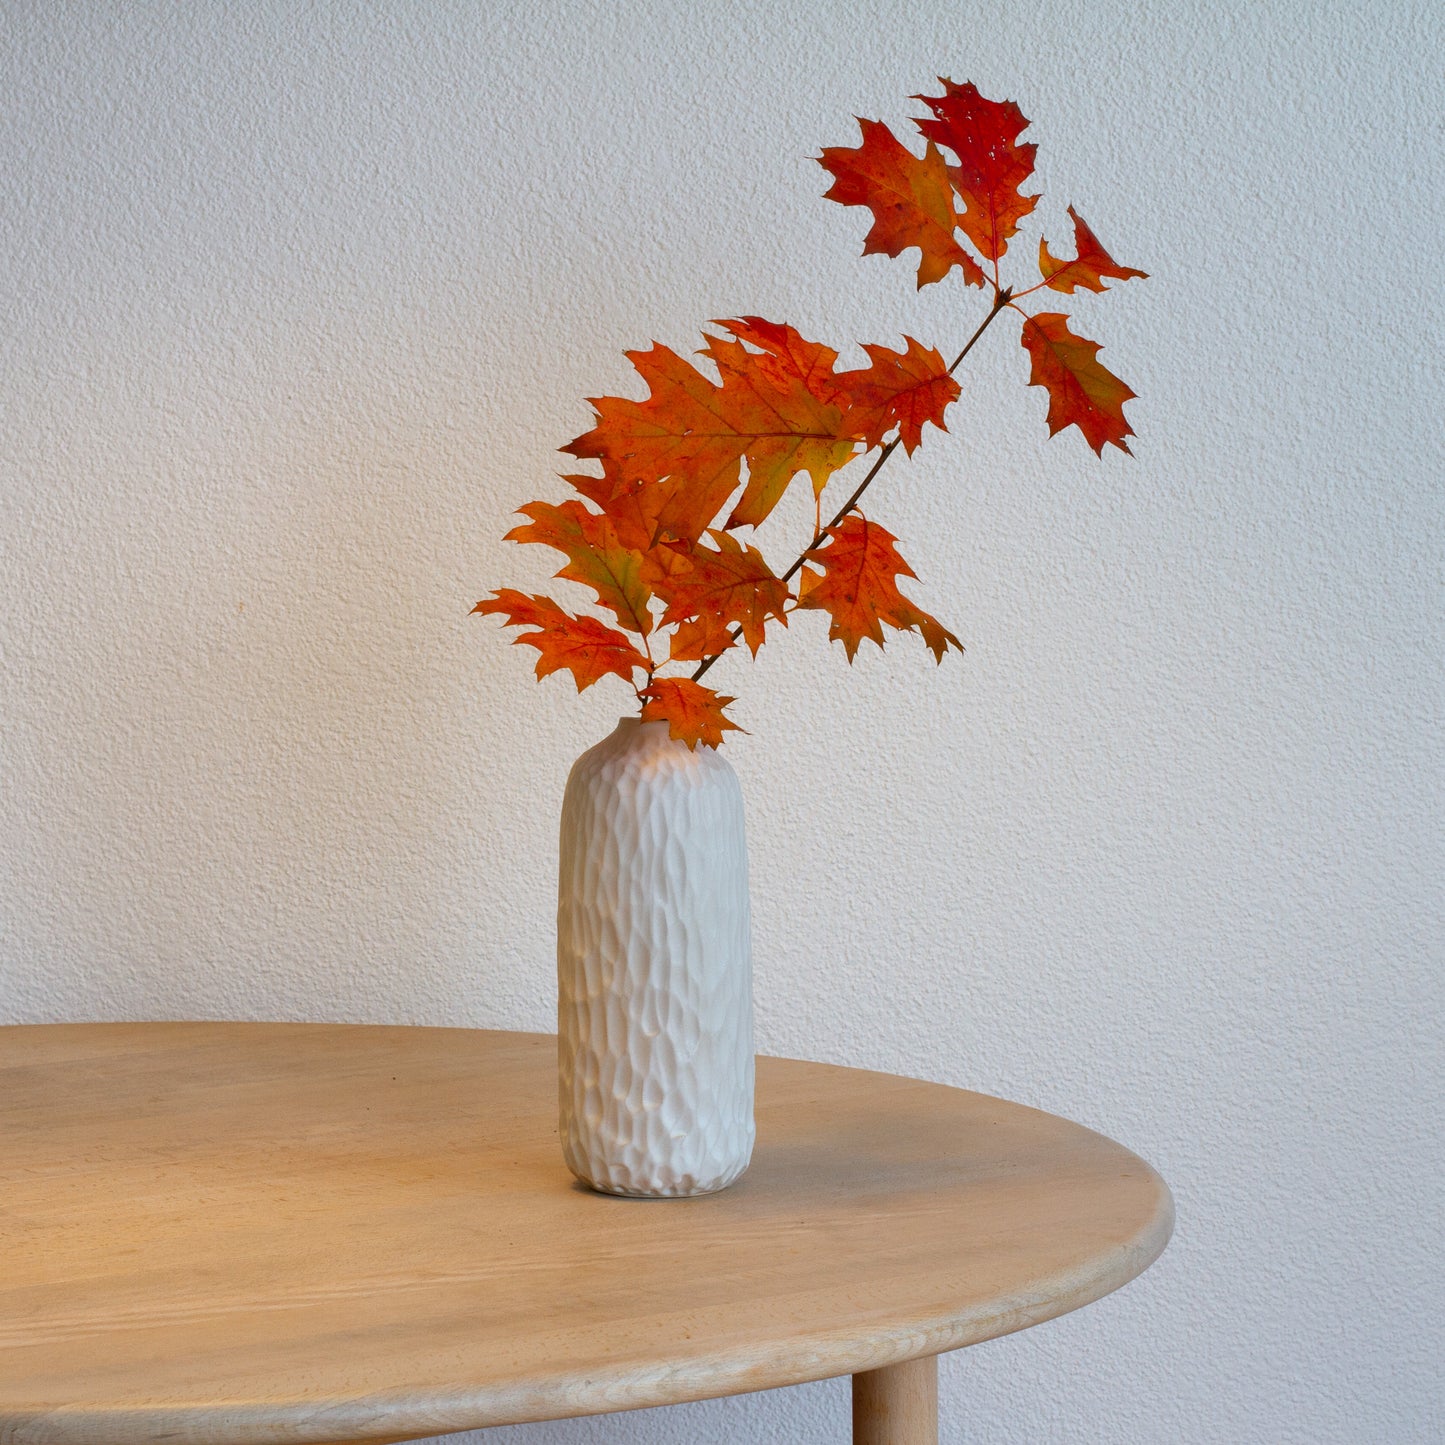 Handmade Carved  vase